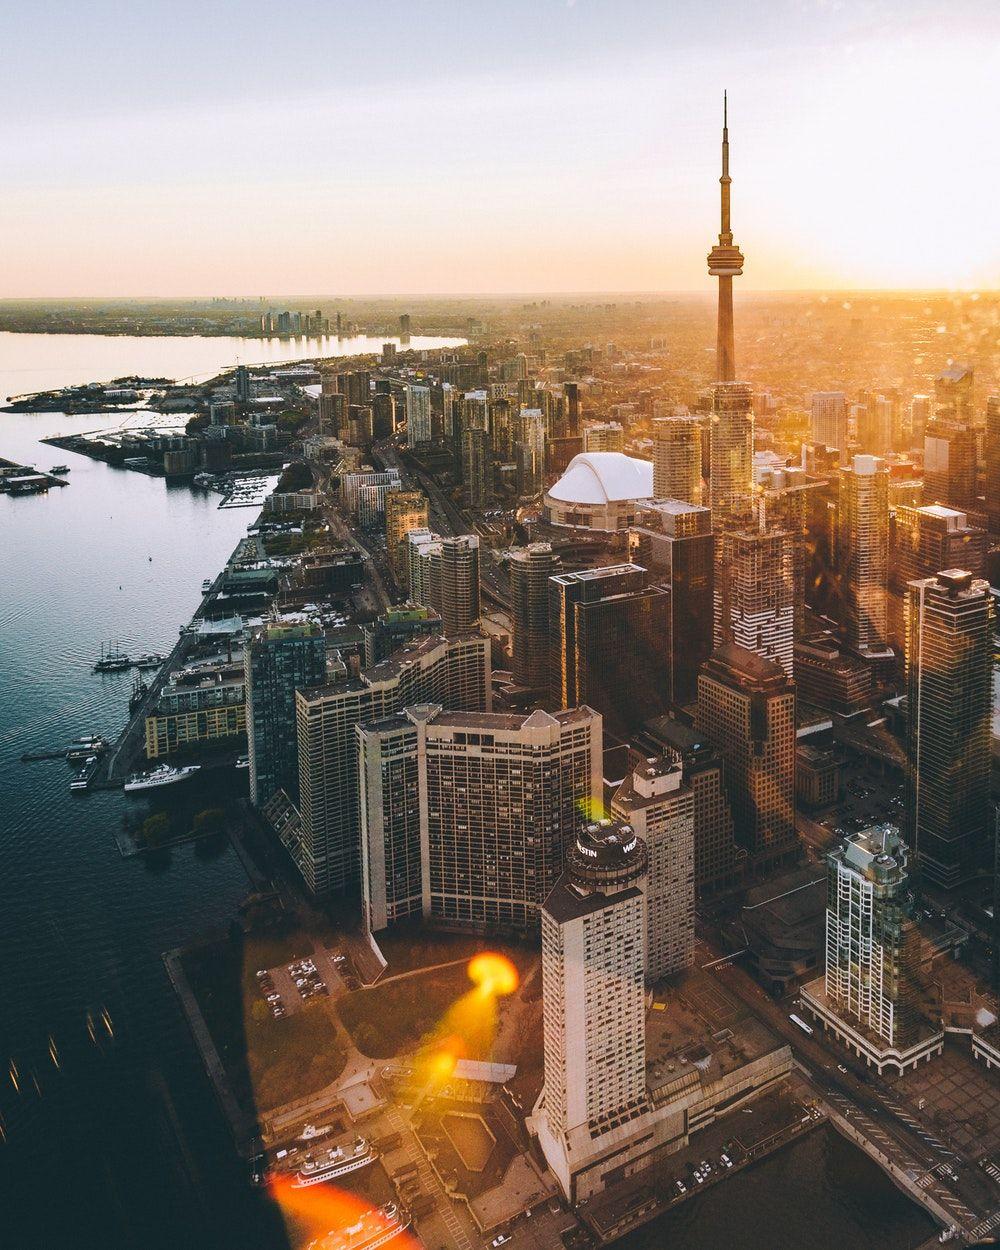 Toronto Picture [Stunning]. Download Free Image